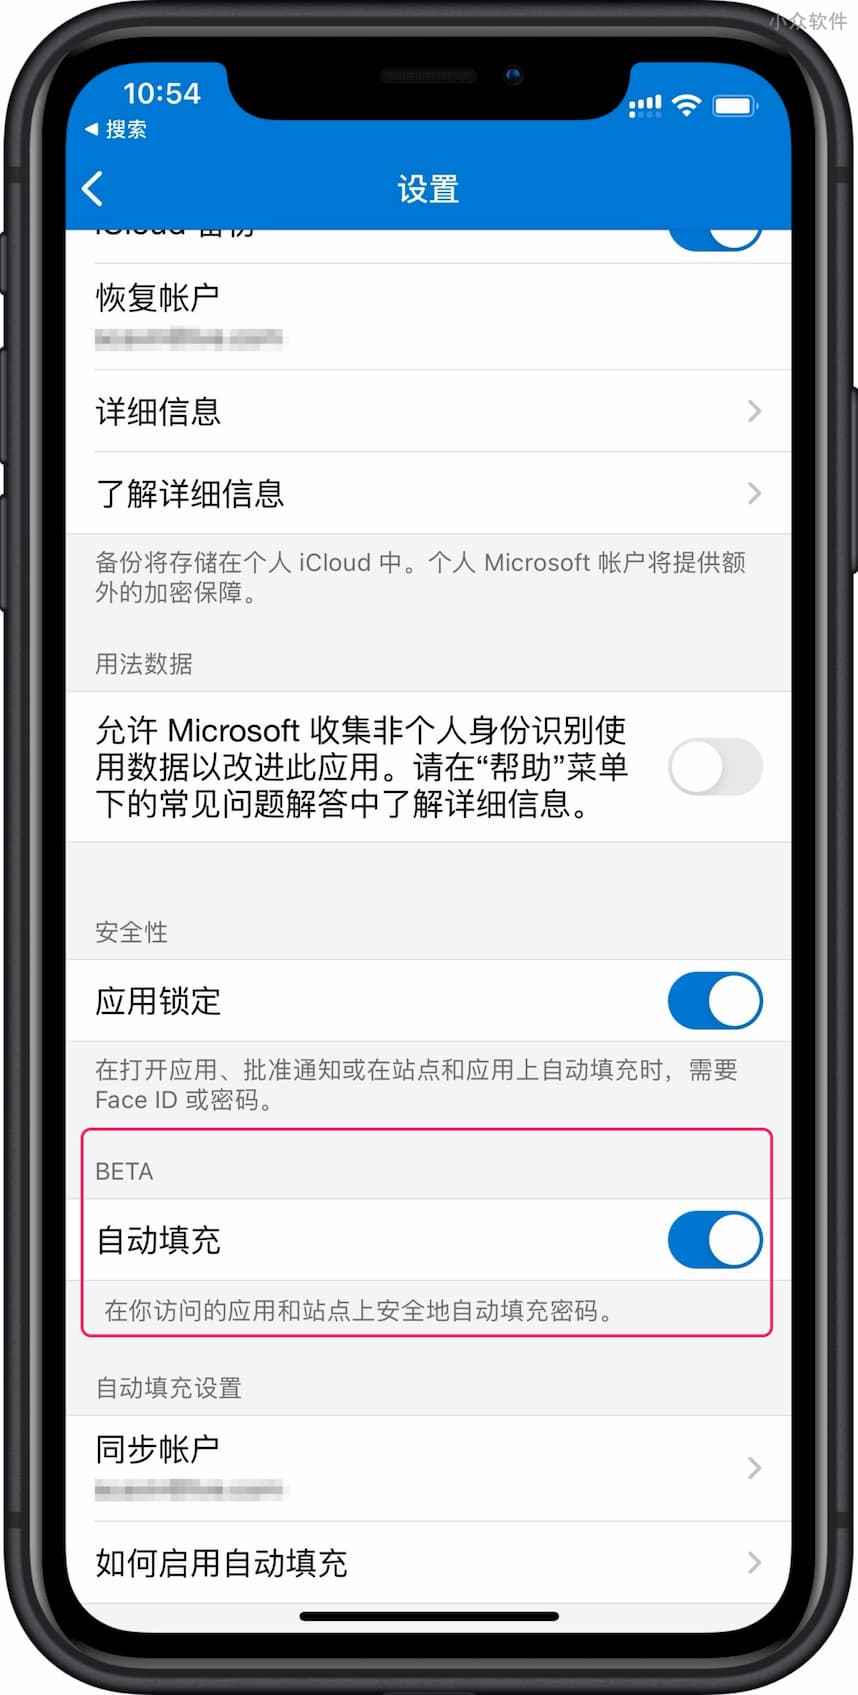 Microsoft Authenticator 密码管理器 - 从 Edge 同步密码，支持在 iPhone、Android 设备及 Chrome 中自动填充密码 1